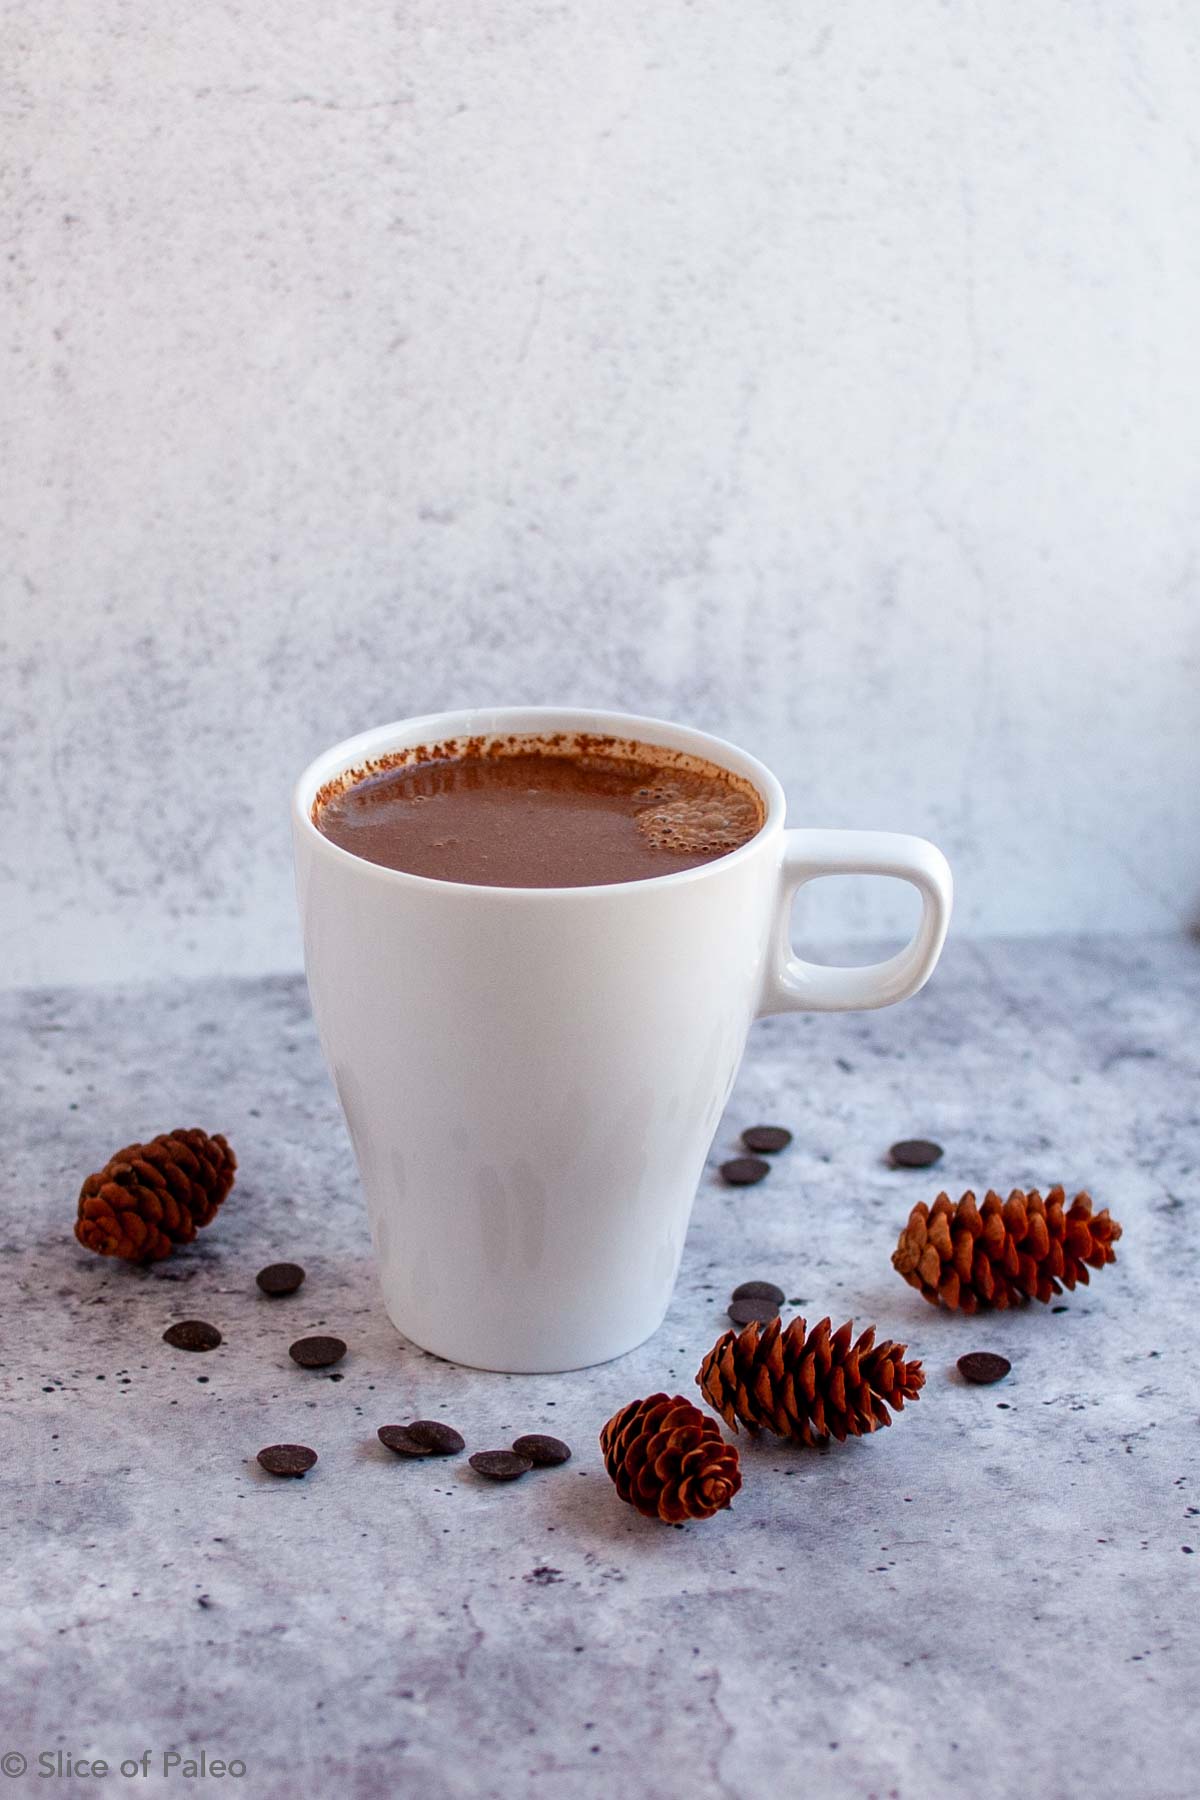 Paleo orange cardamom hot chocolate served in a mug